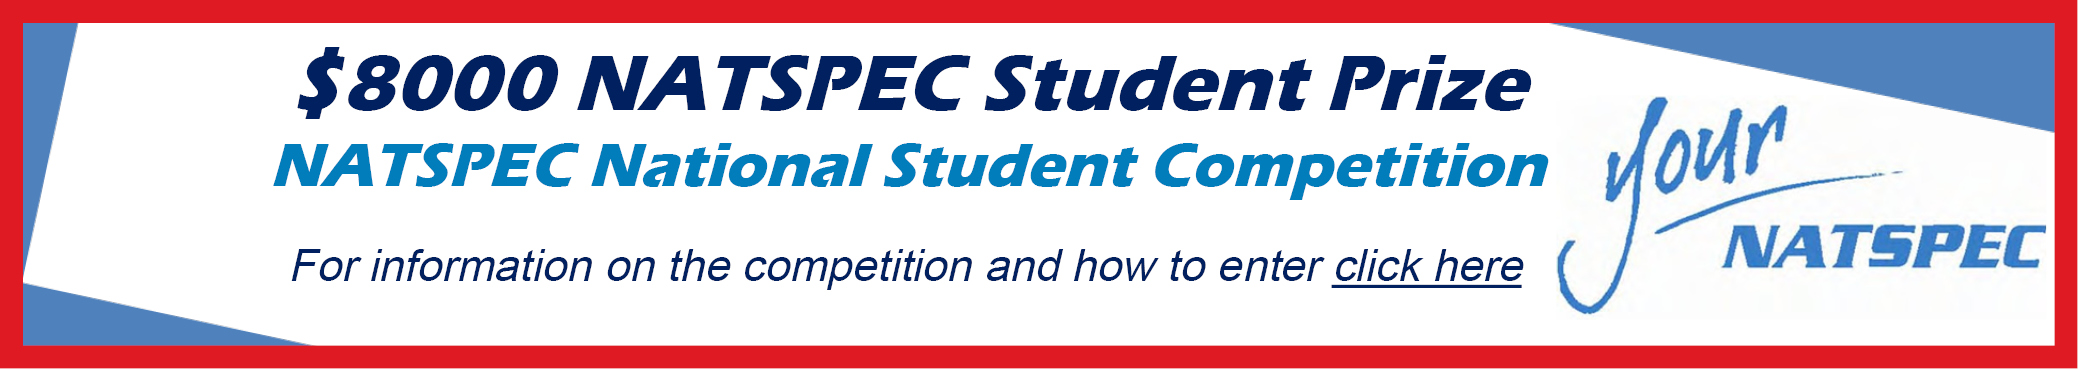 NATSPEC student competition website banner